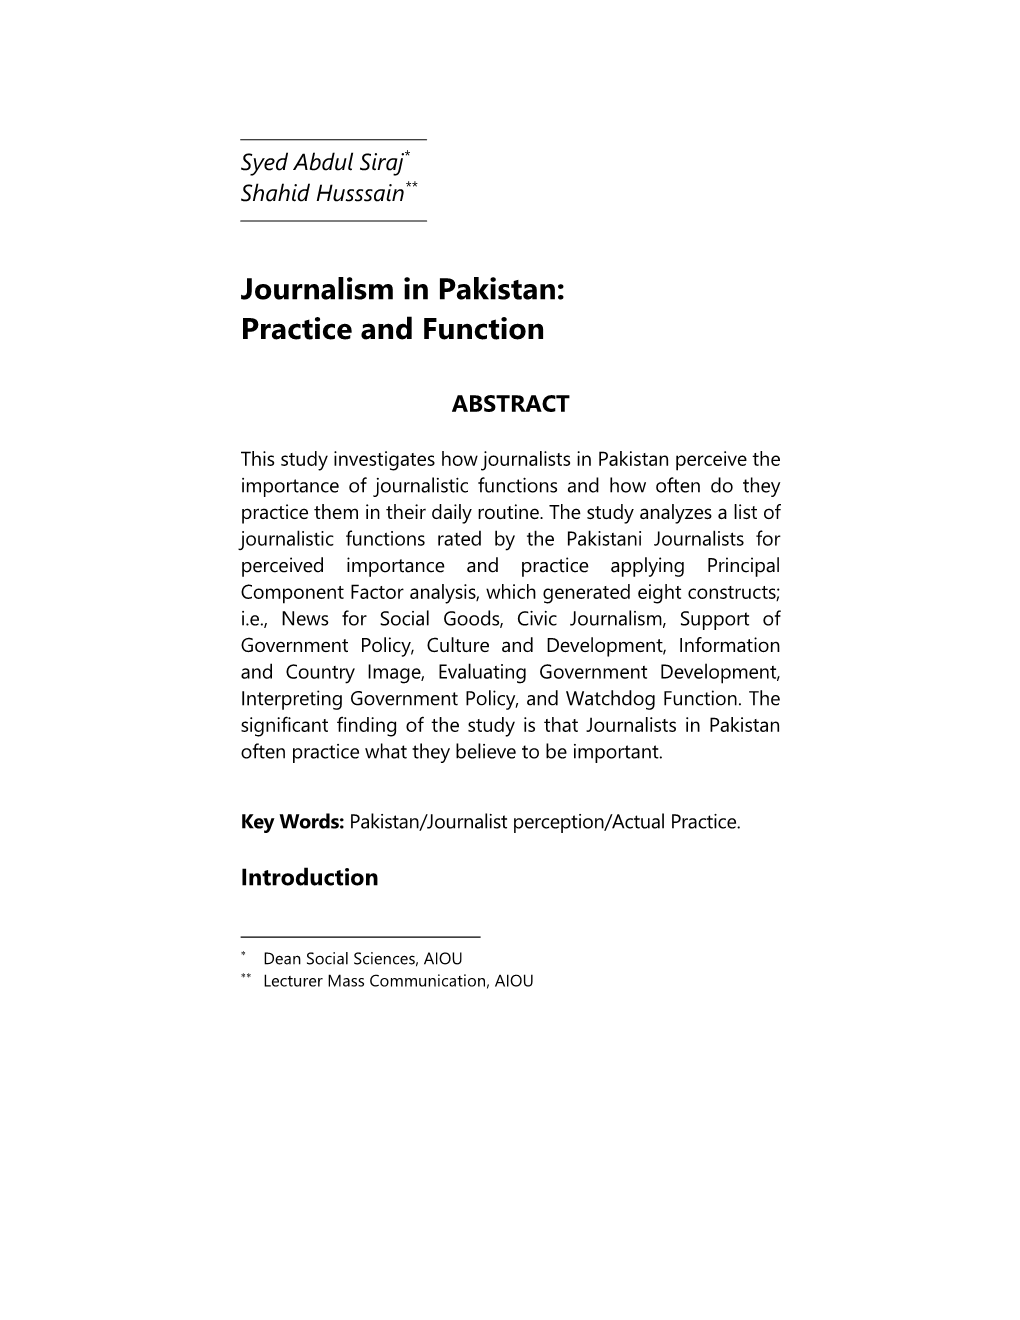 Journalism in Pakistan: Practice and Function